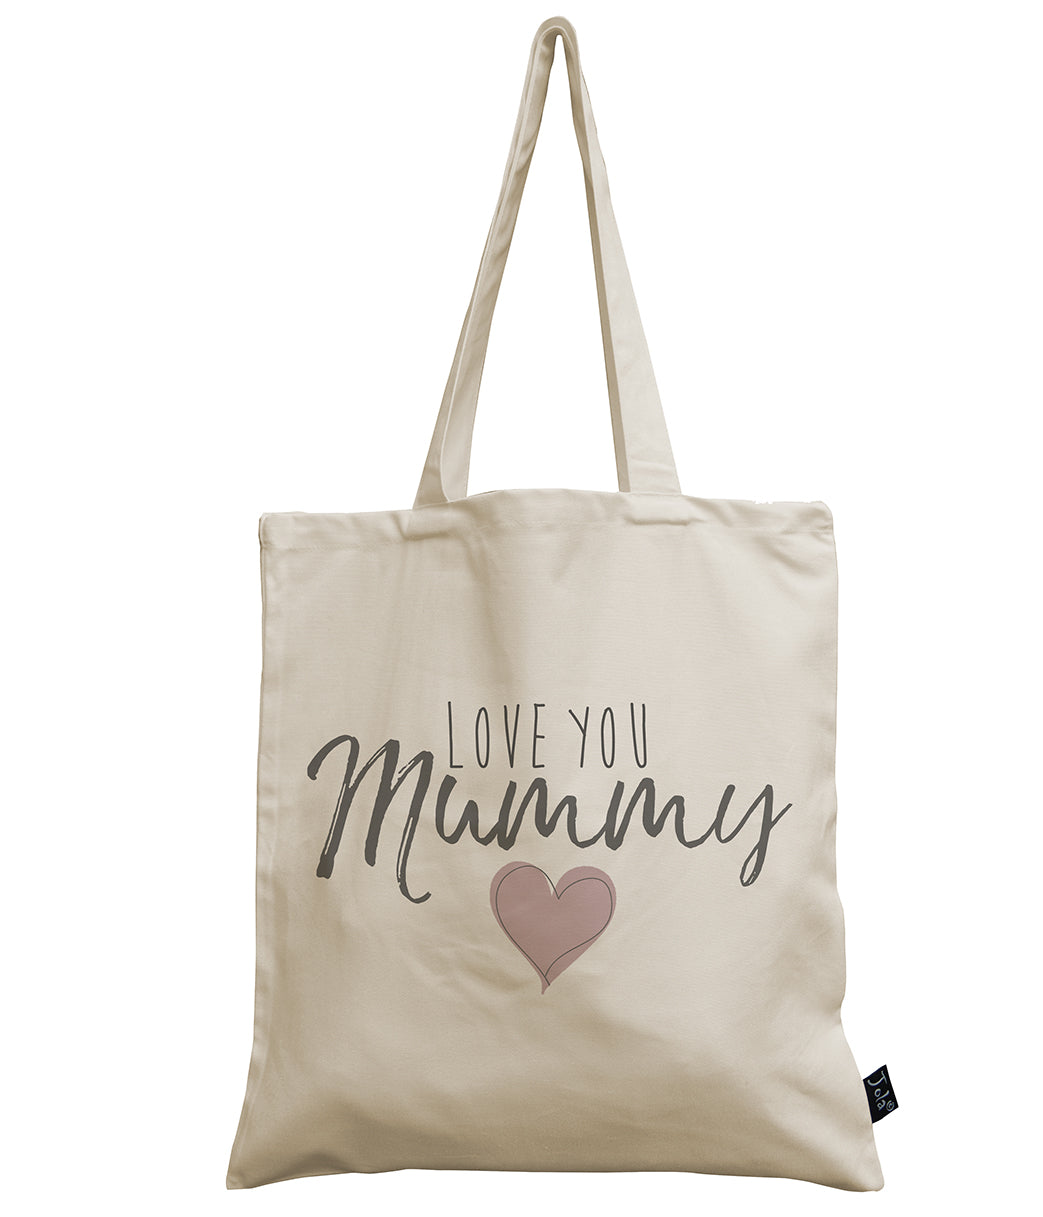 Love you Mummy canvas bag